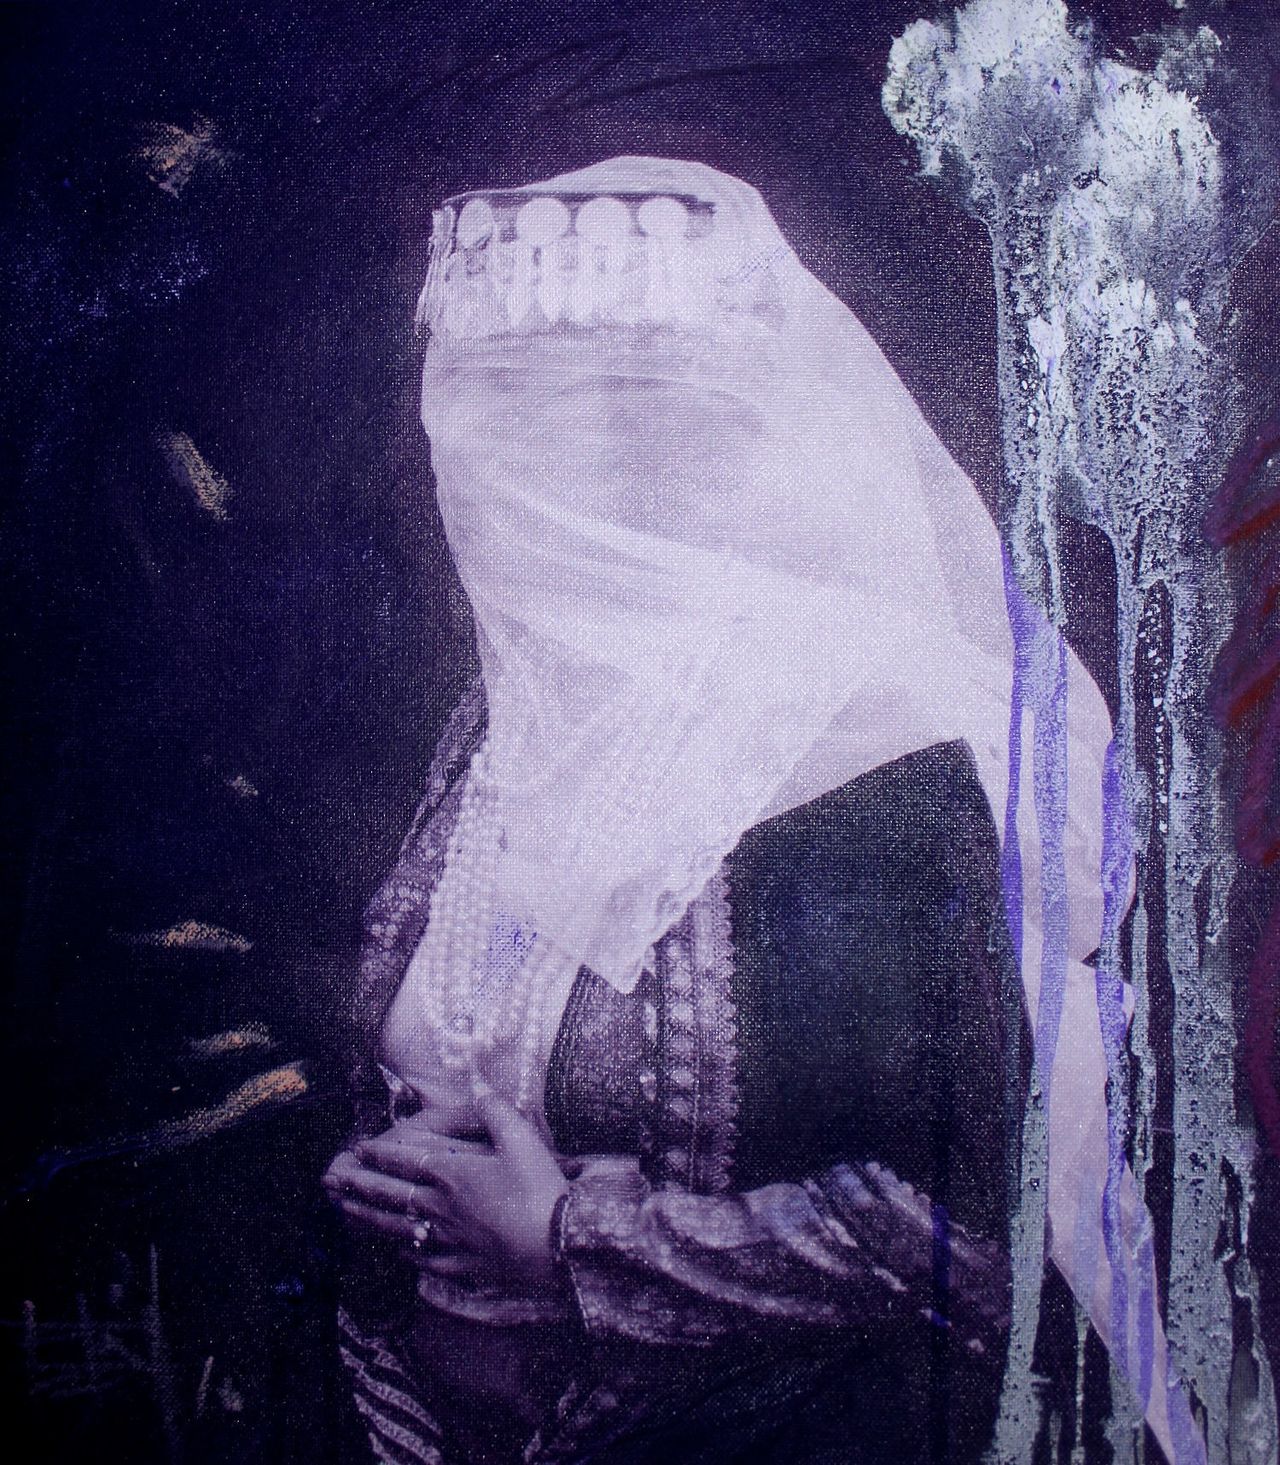 Firouz Farman-Farmaian. "A Woman with Veil in Purple (Study IV)" (2016), amazonite pigment, acrylic, digital art layered on archival canvas print, 15”x14”.